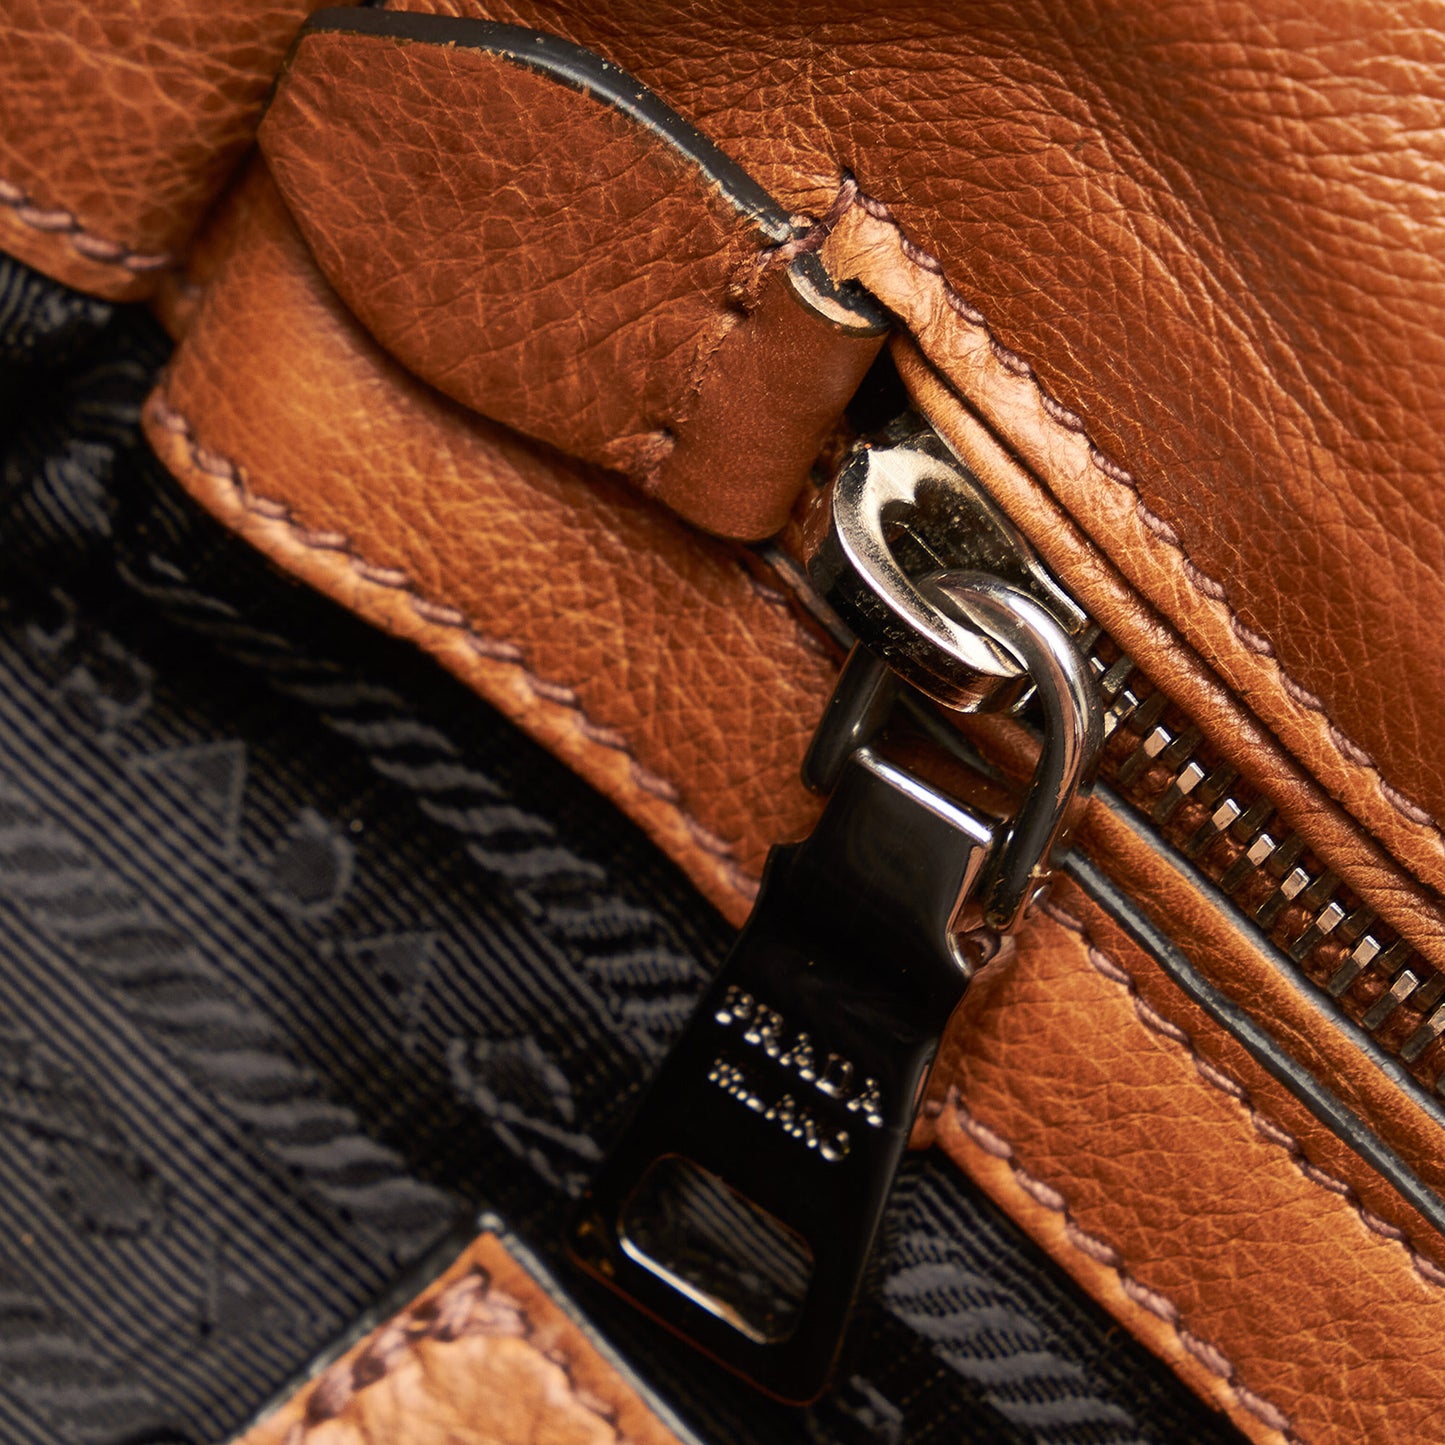 Twin Pocket Leather Handbag